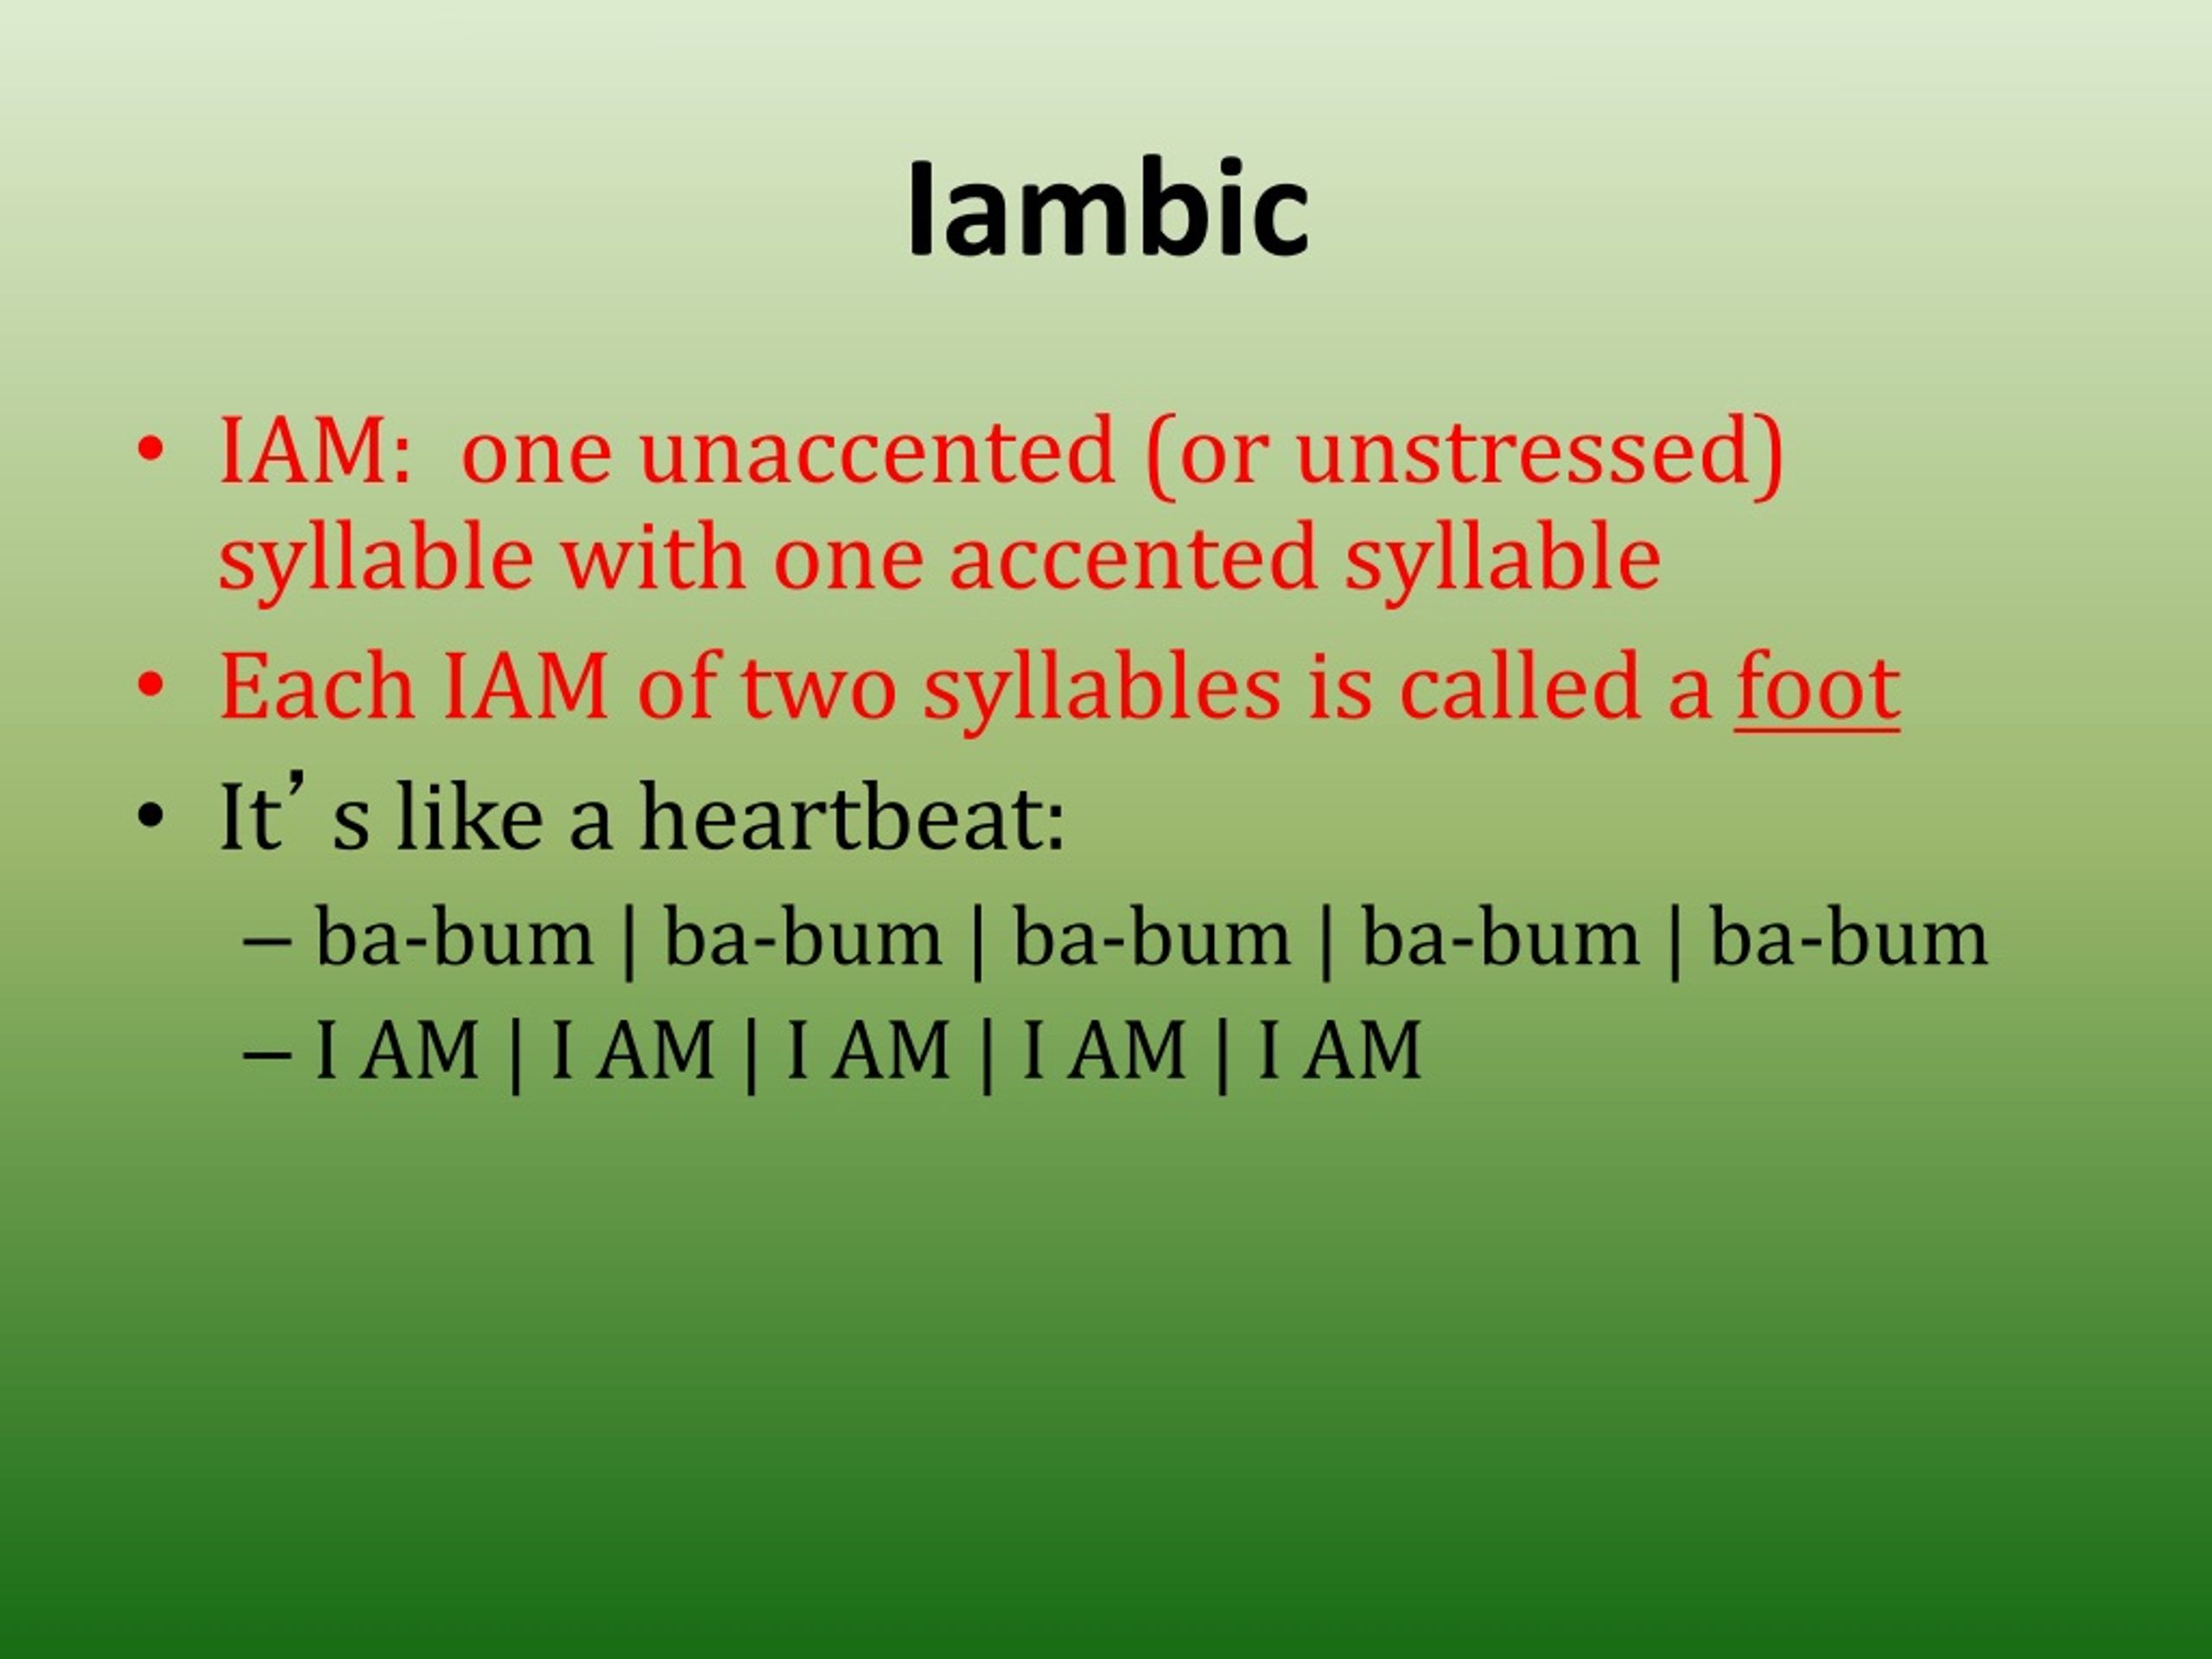 shakespearean sonnet 14 lines of iambic pentameter